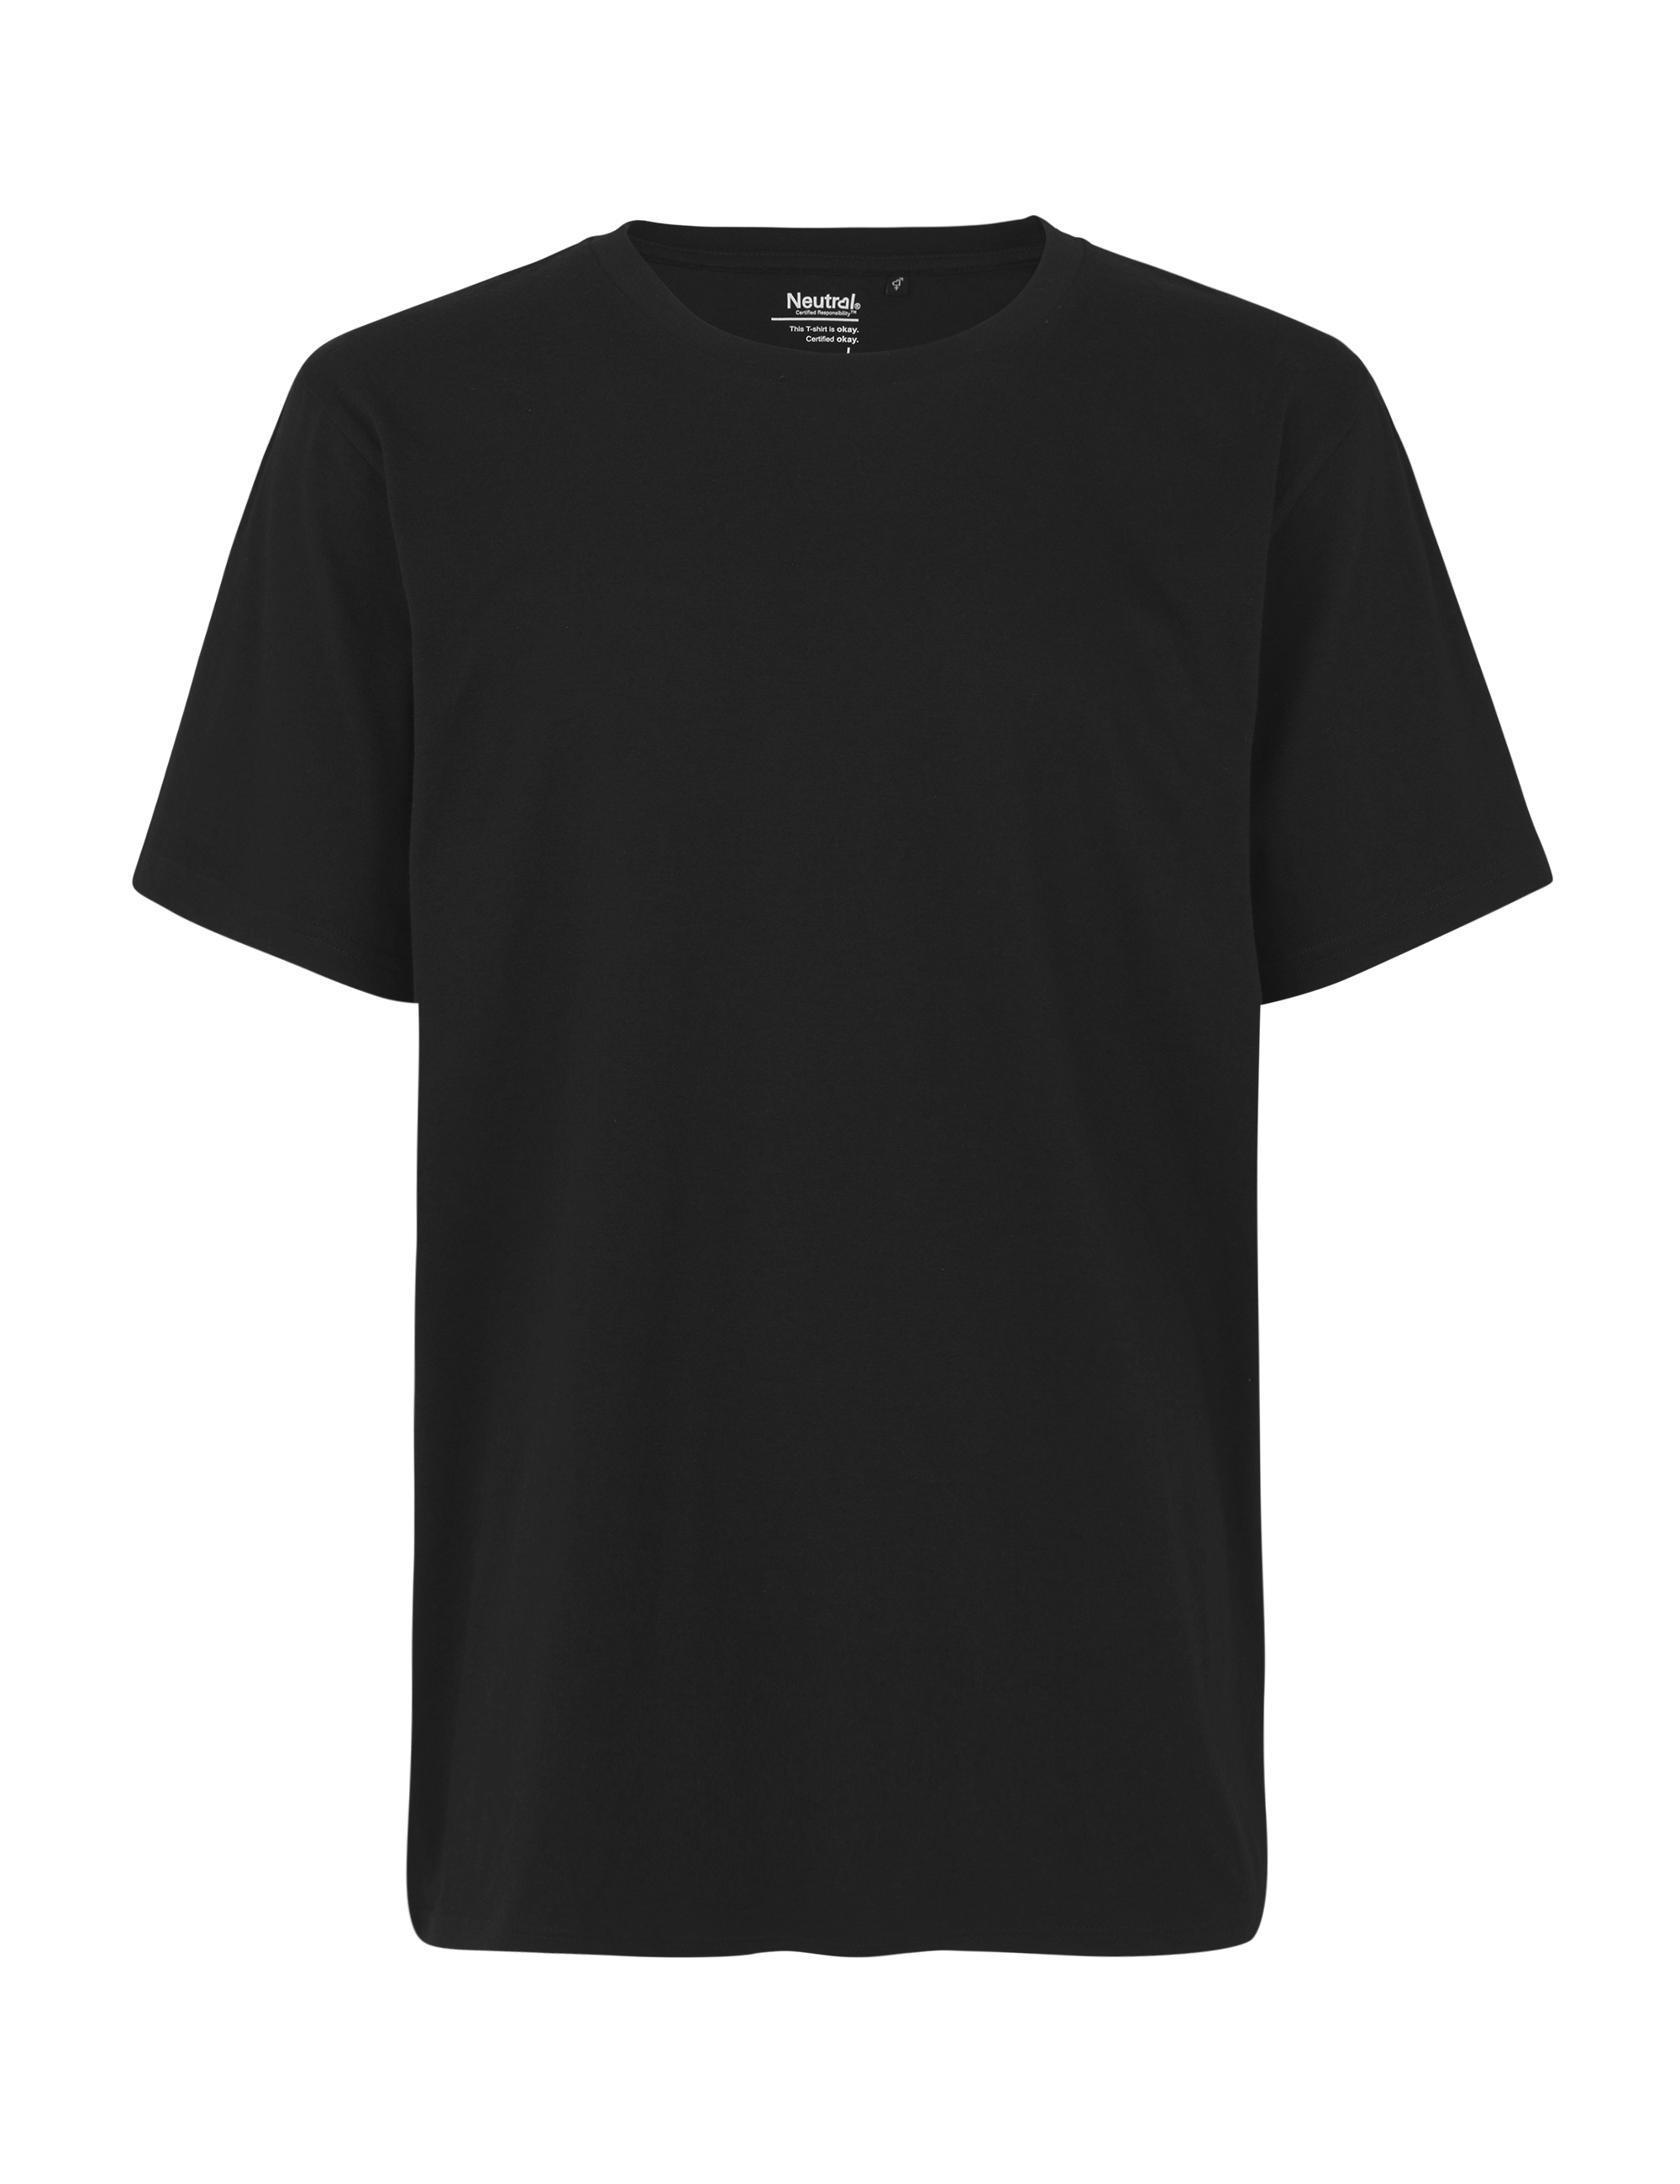 Organic Fairtrade Workwear T-Shirt 155 g/m² Neutral® Black S